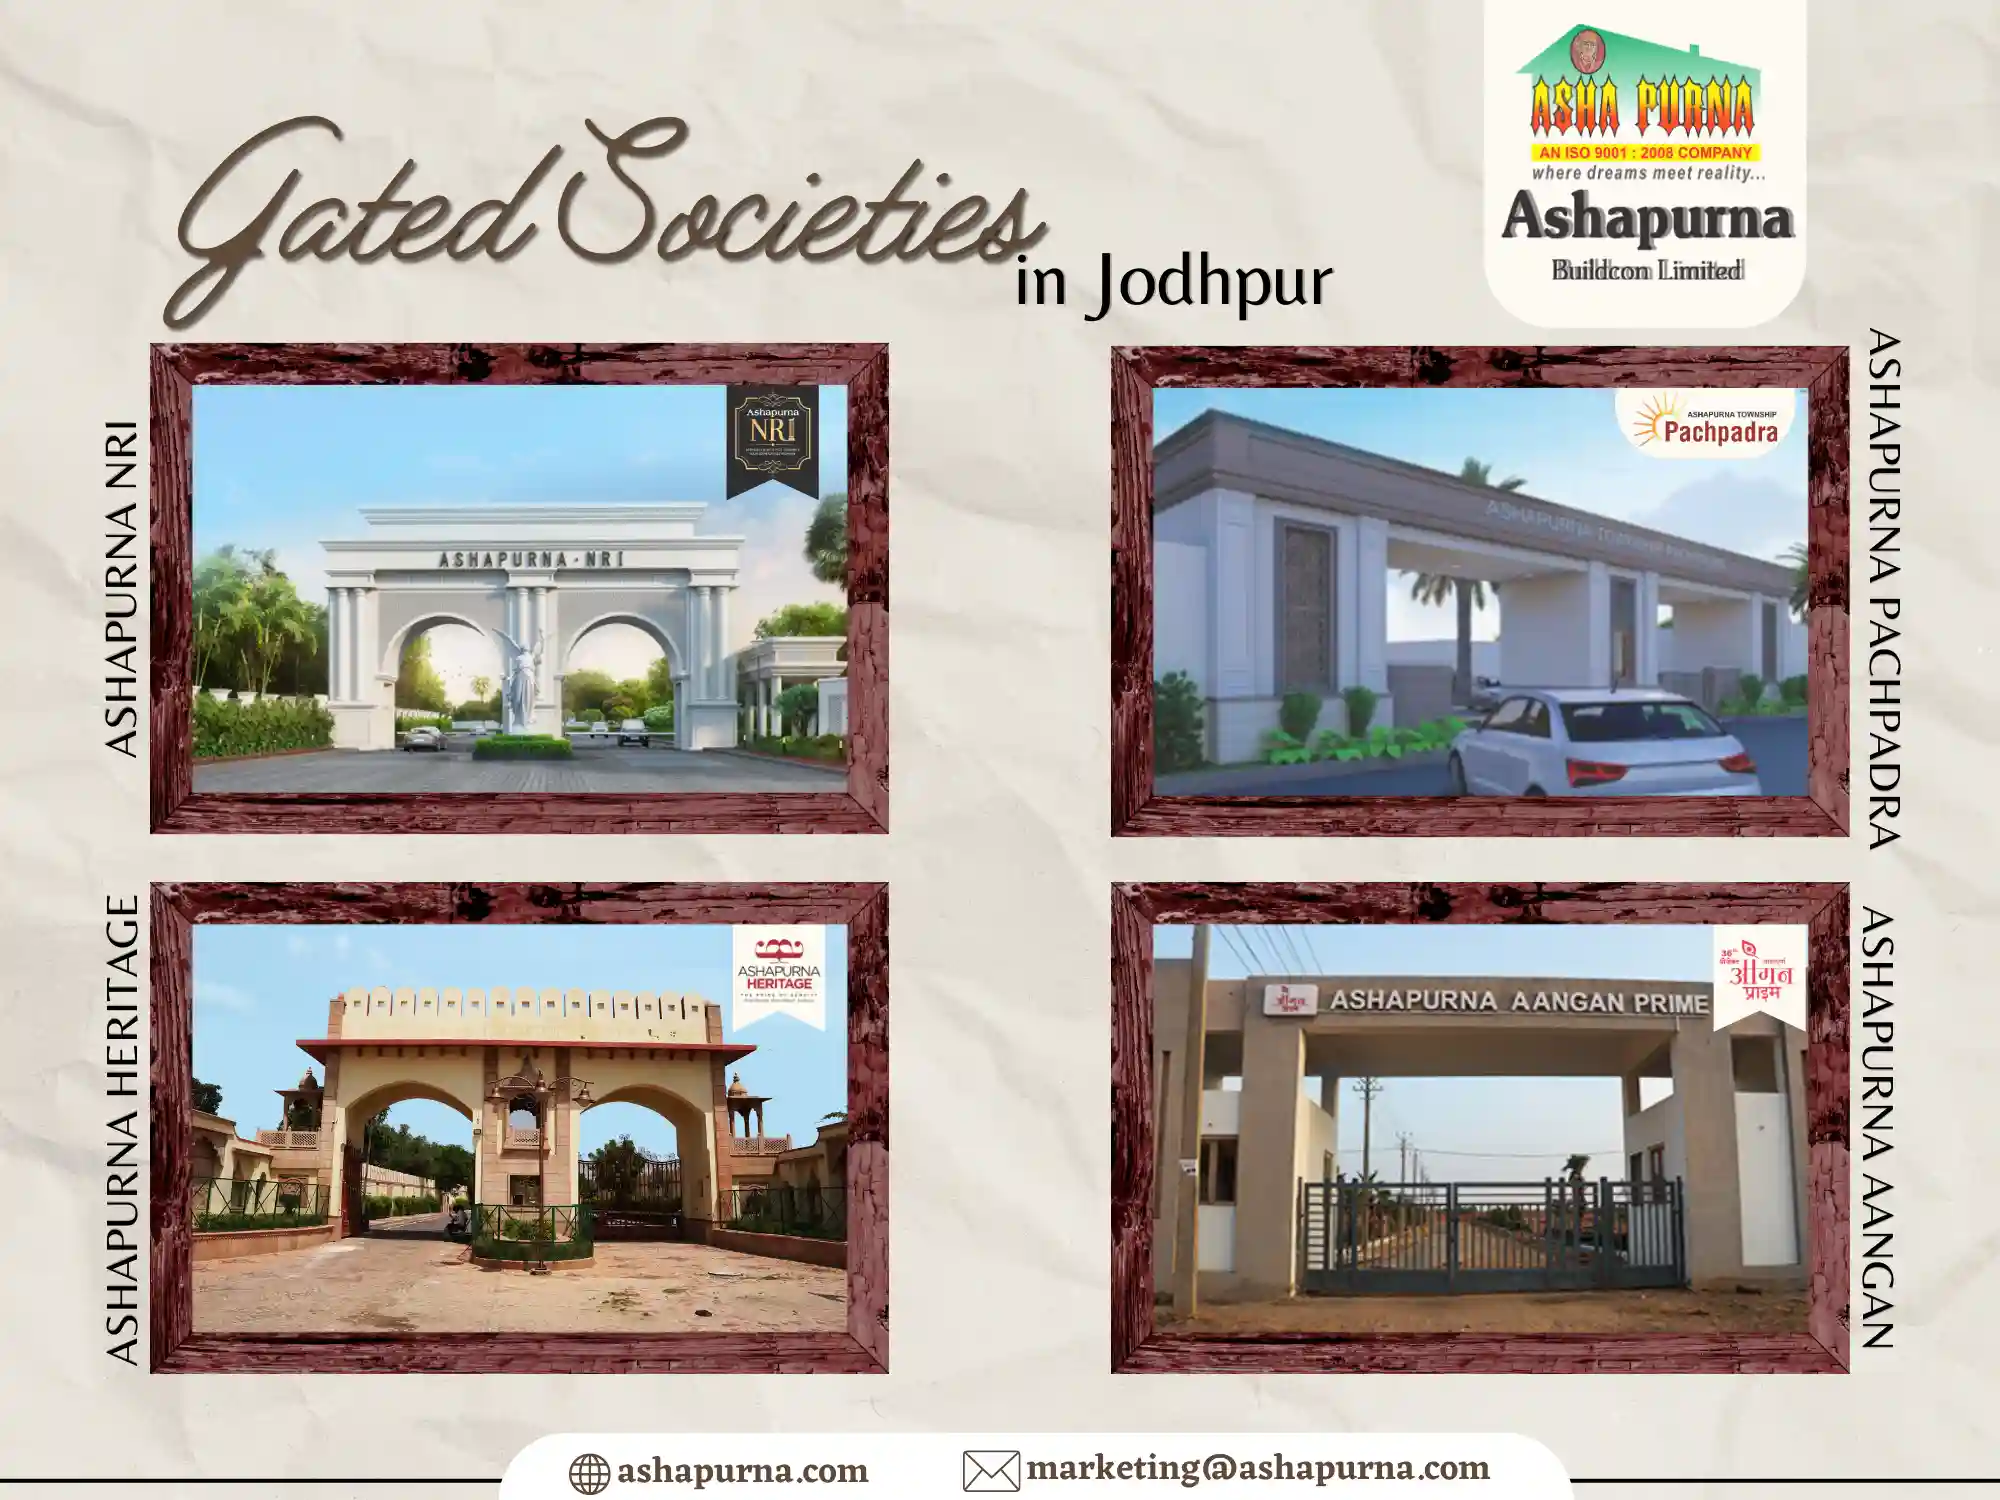 photos of gated societies in jodhpur by ashapurna buildcon ltd.